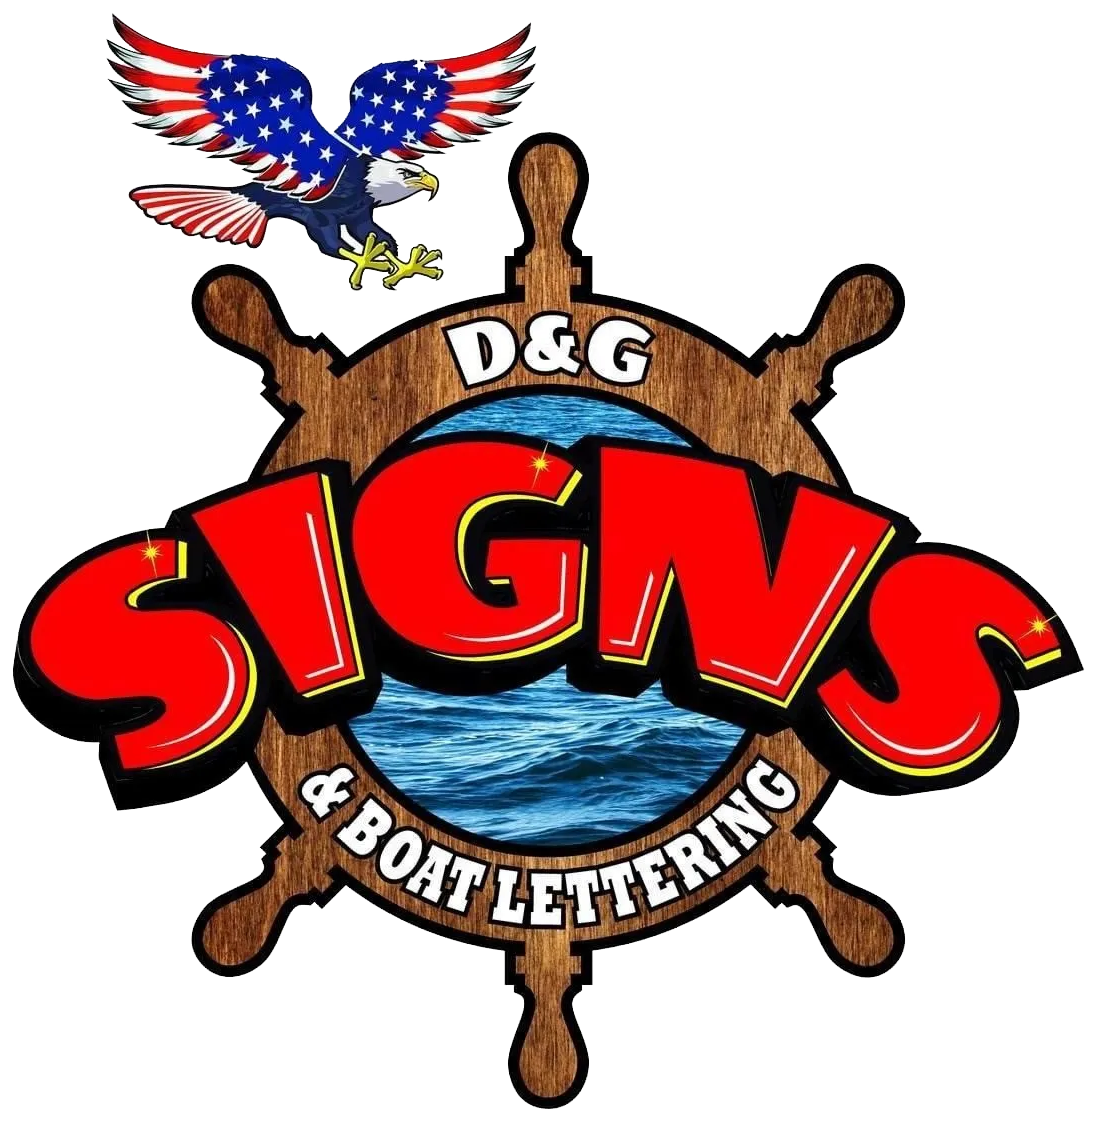 D&G Signs Inc